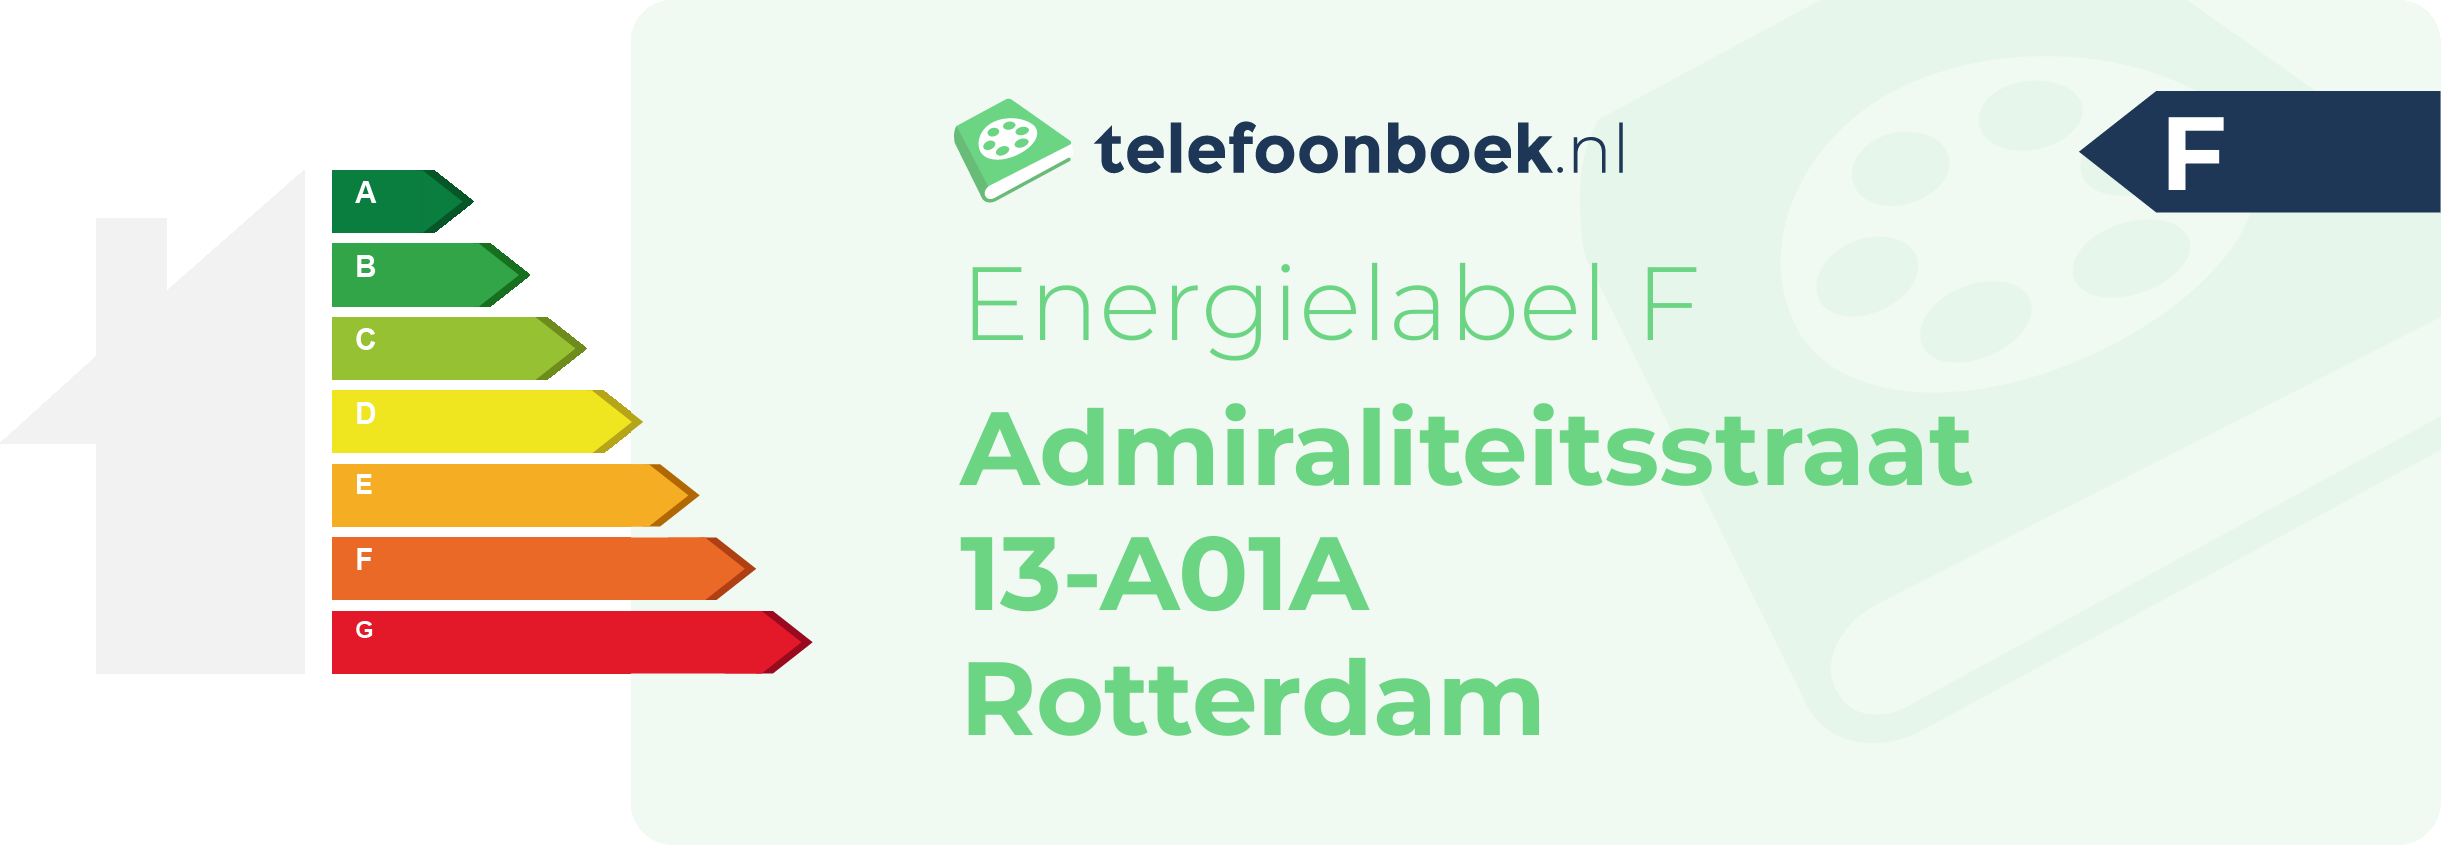 Energielabel Admiraliteitsstraat 13-A01A Rotterdam